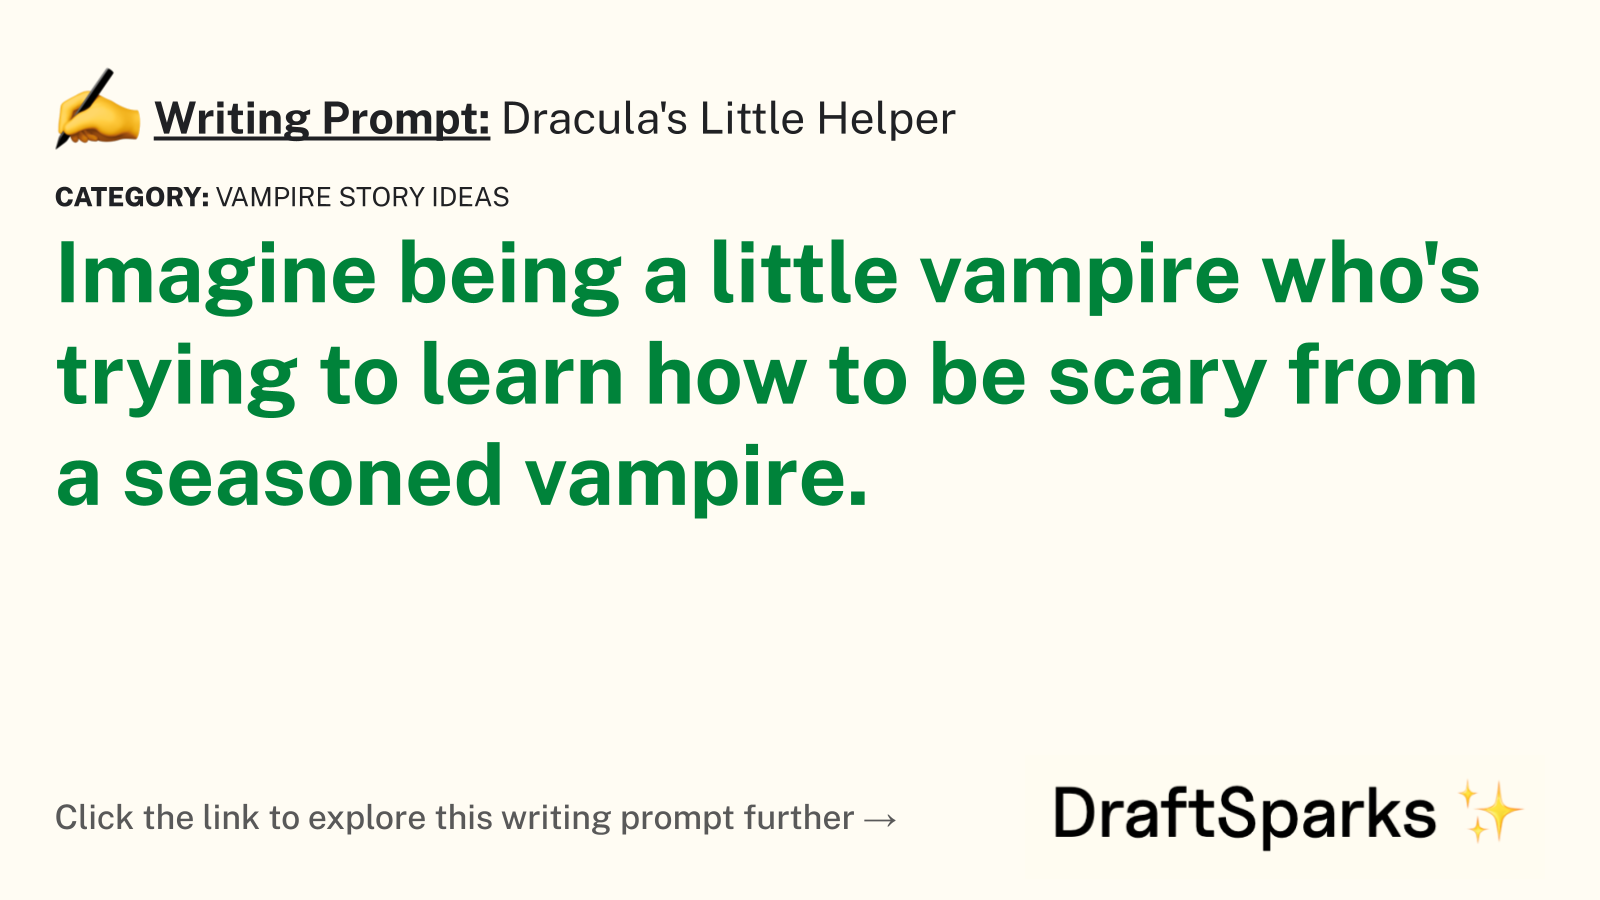 Dracula’s Little Helper